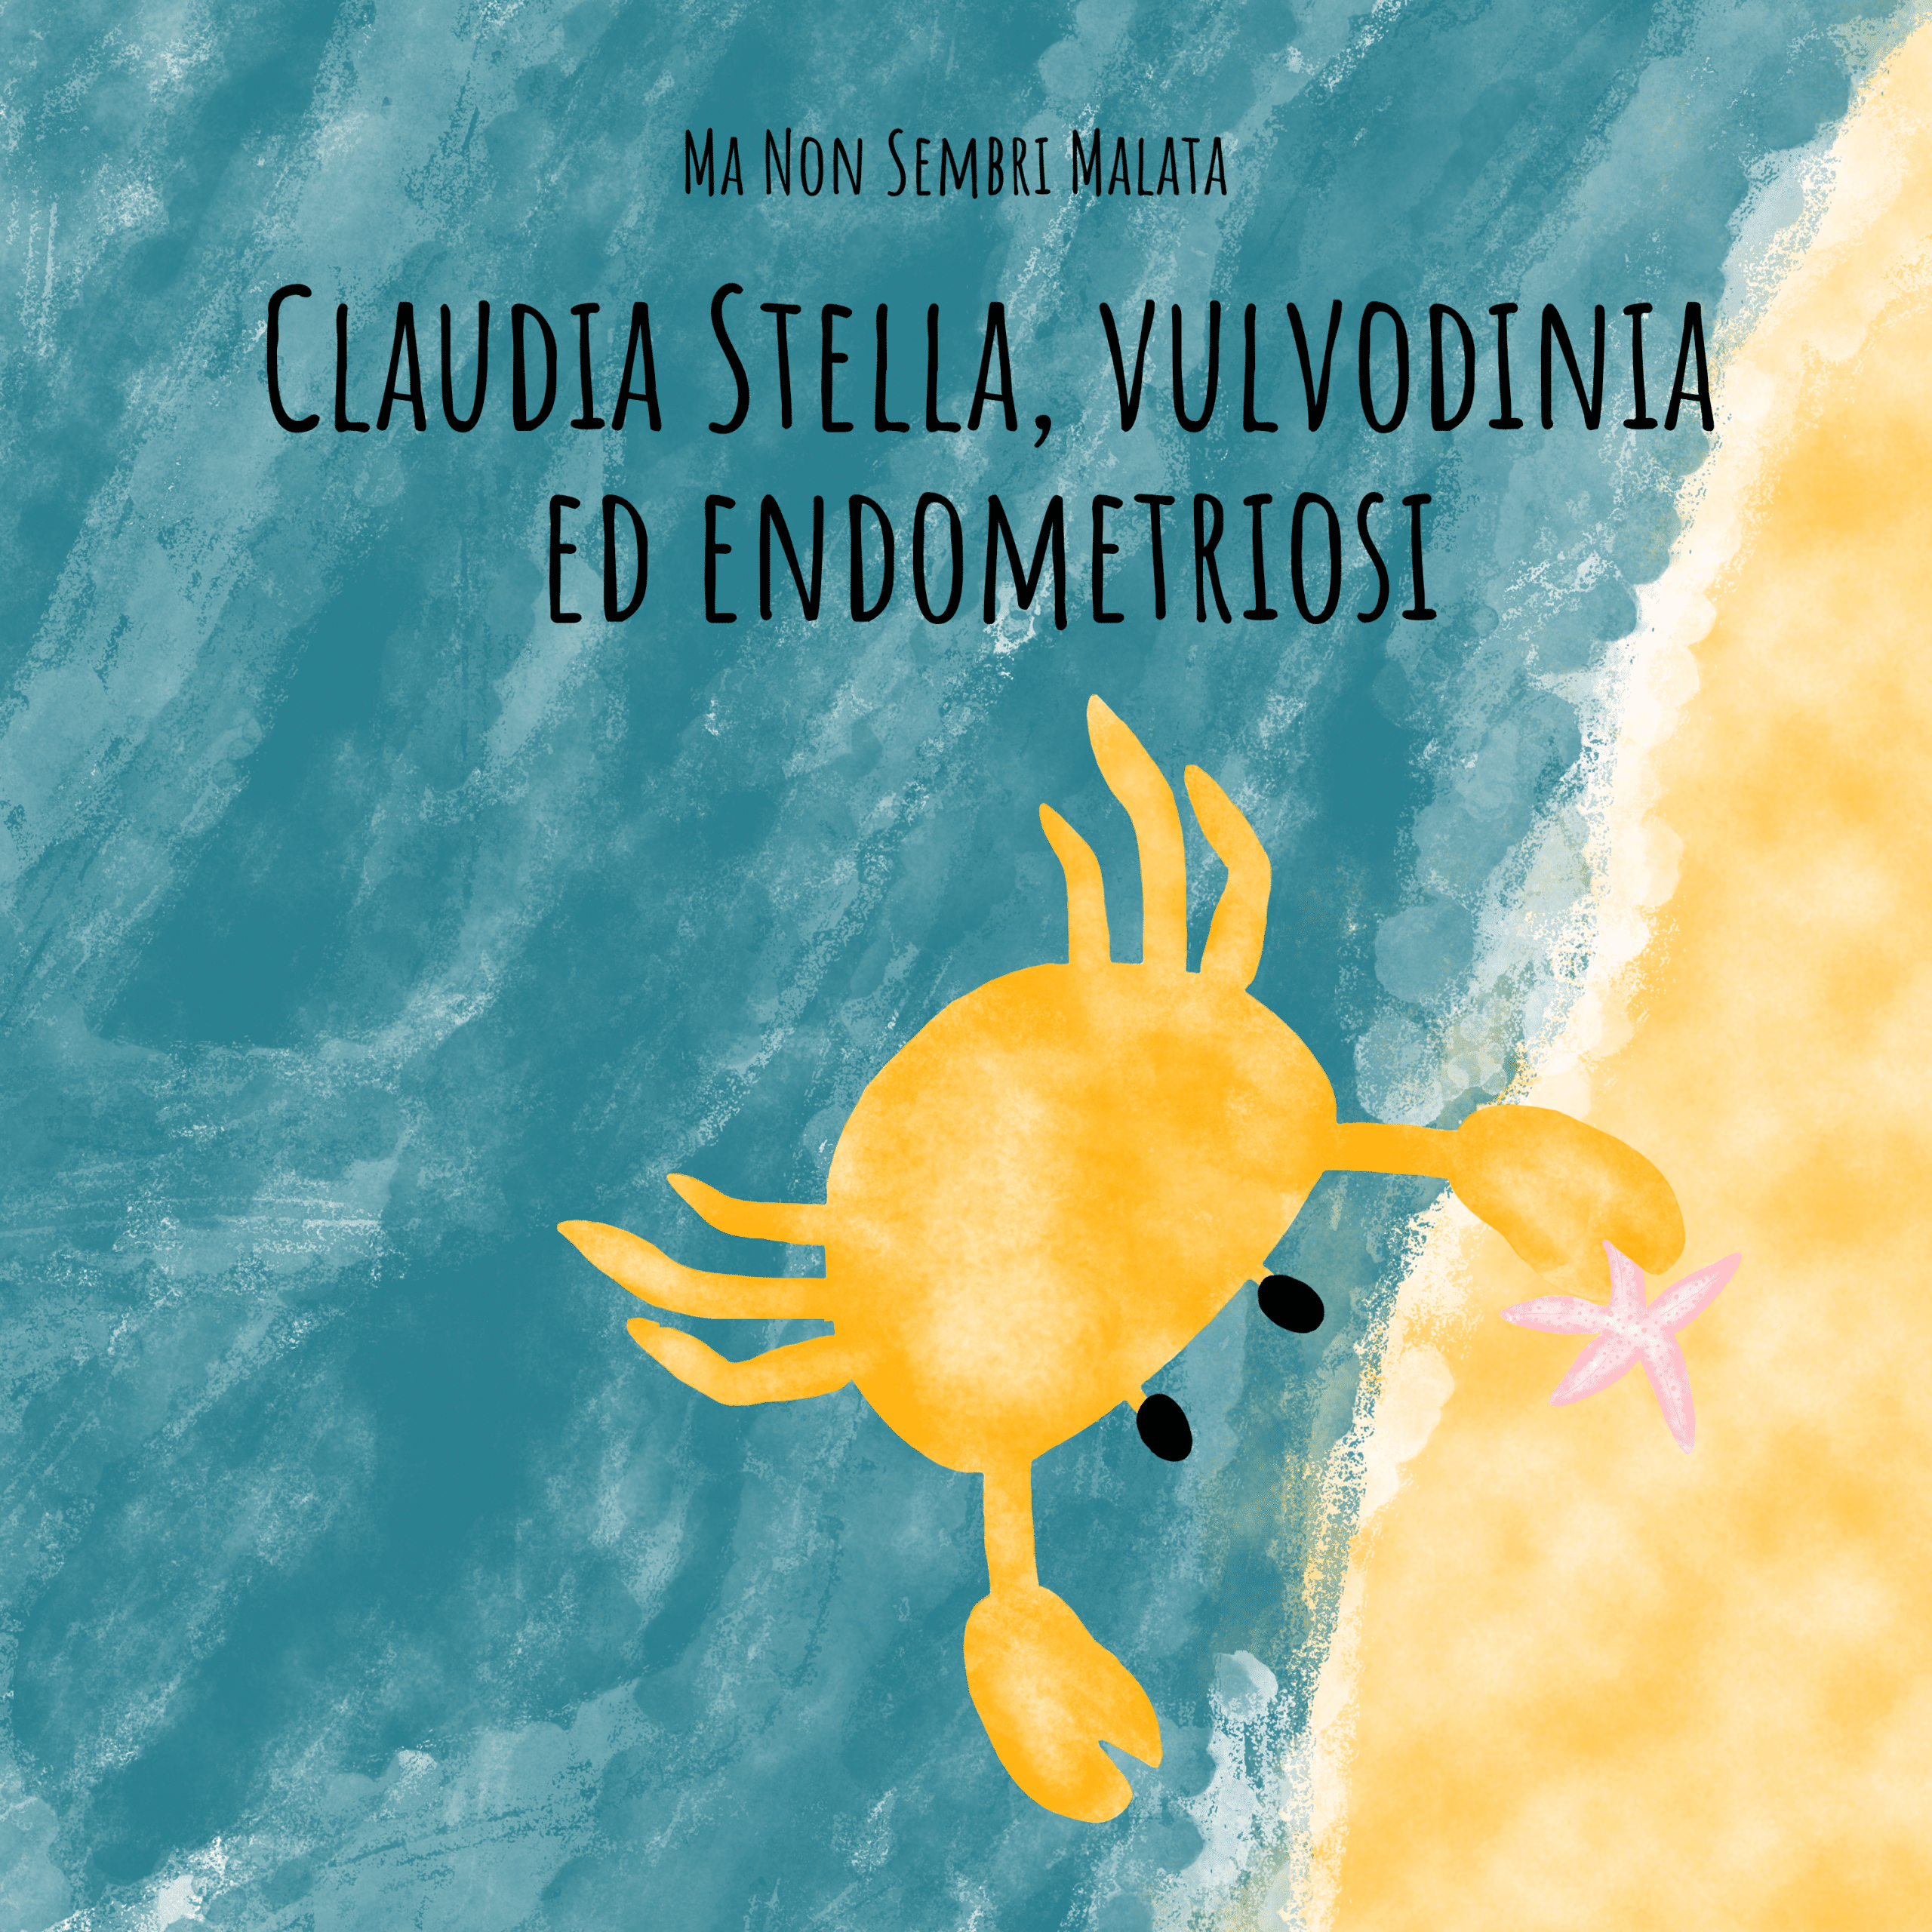 Claudia Stella, vulvodinia ed endometriosi